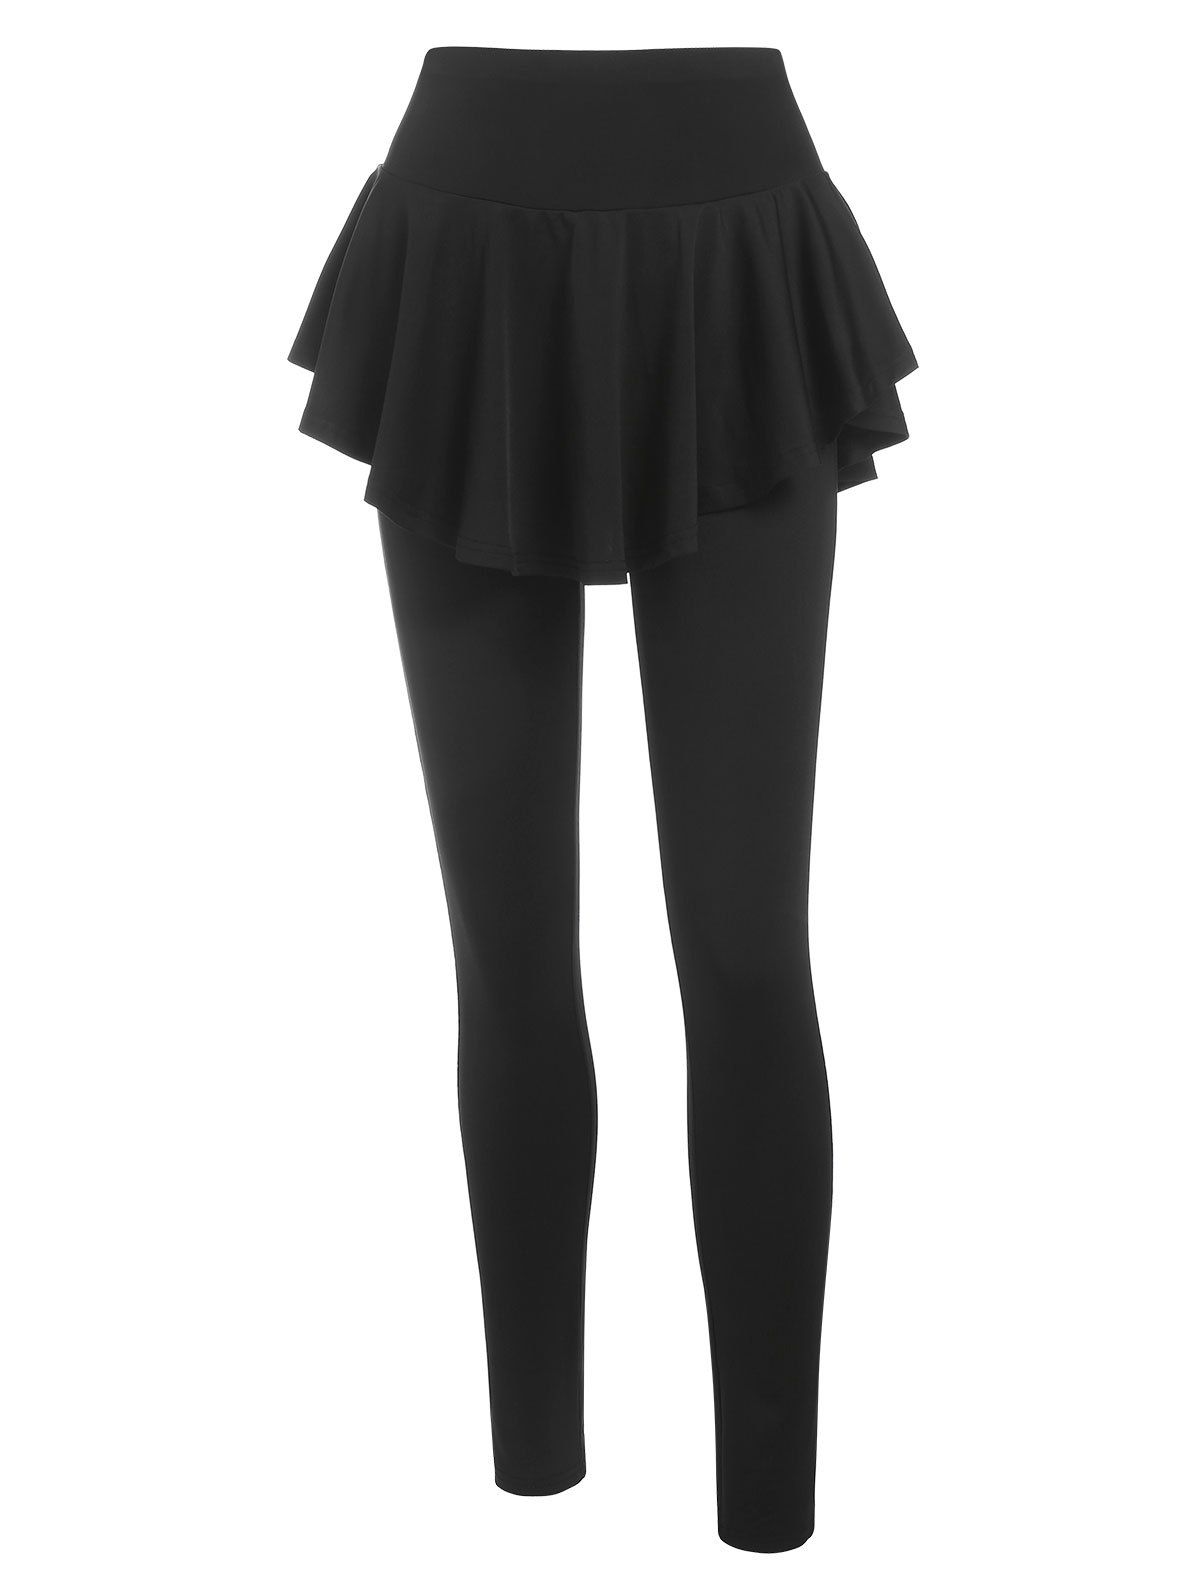 High Waisted Skinny Skirted Pants - BLACK XL